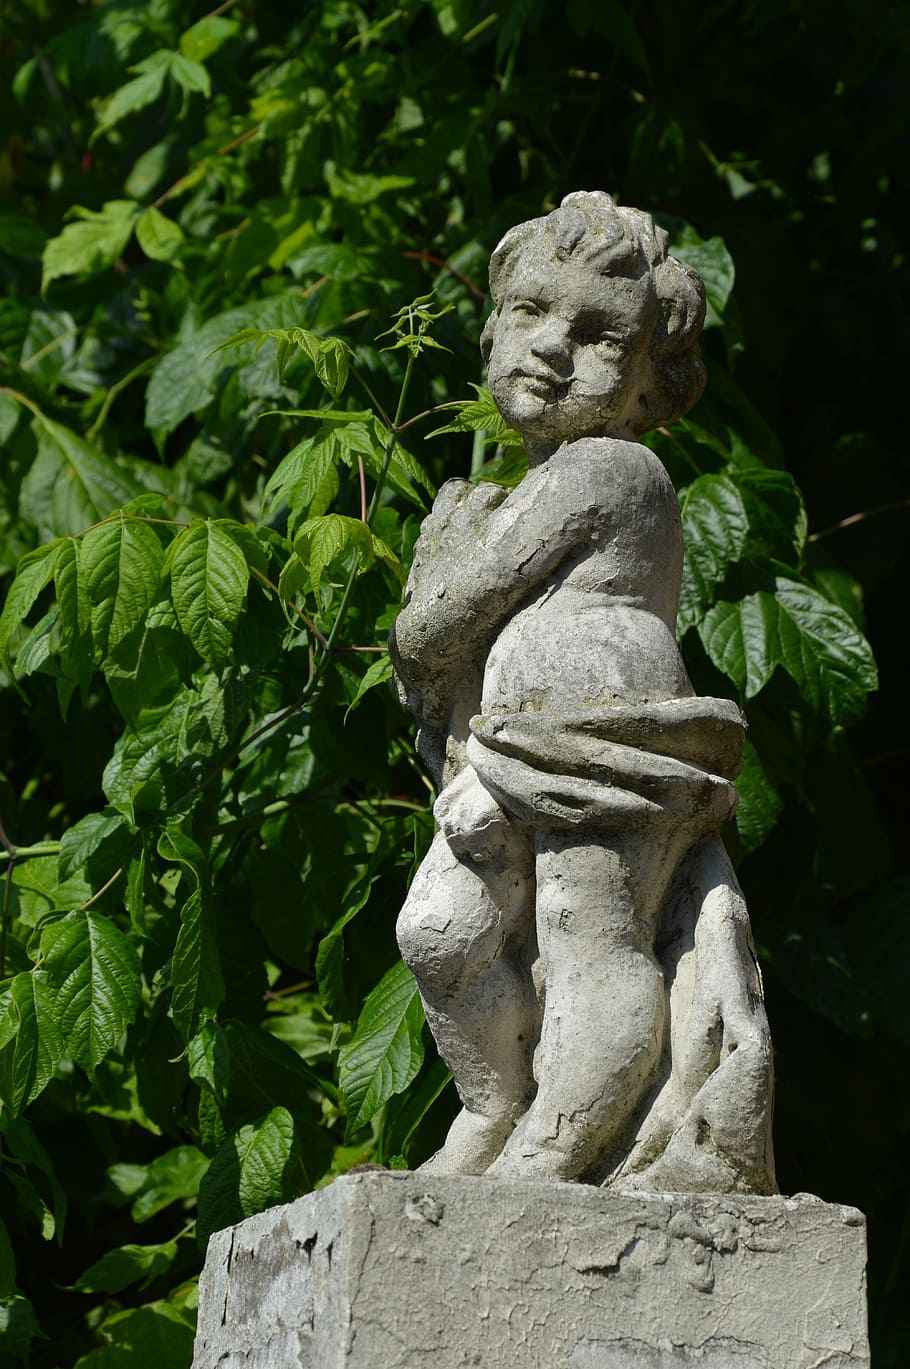 Cherub, Statue, Greenery, Italy, summer, sculpture, no people